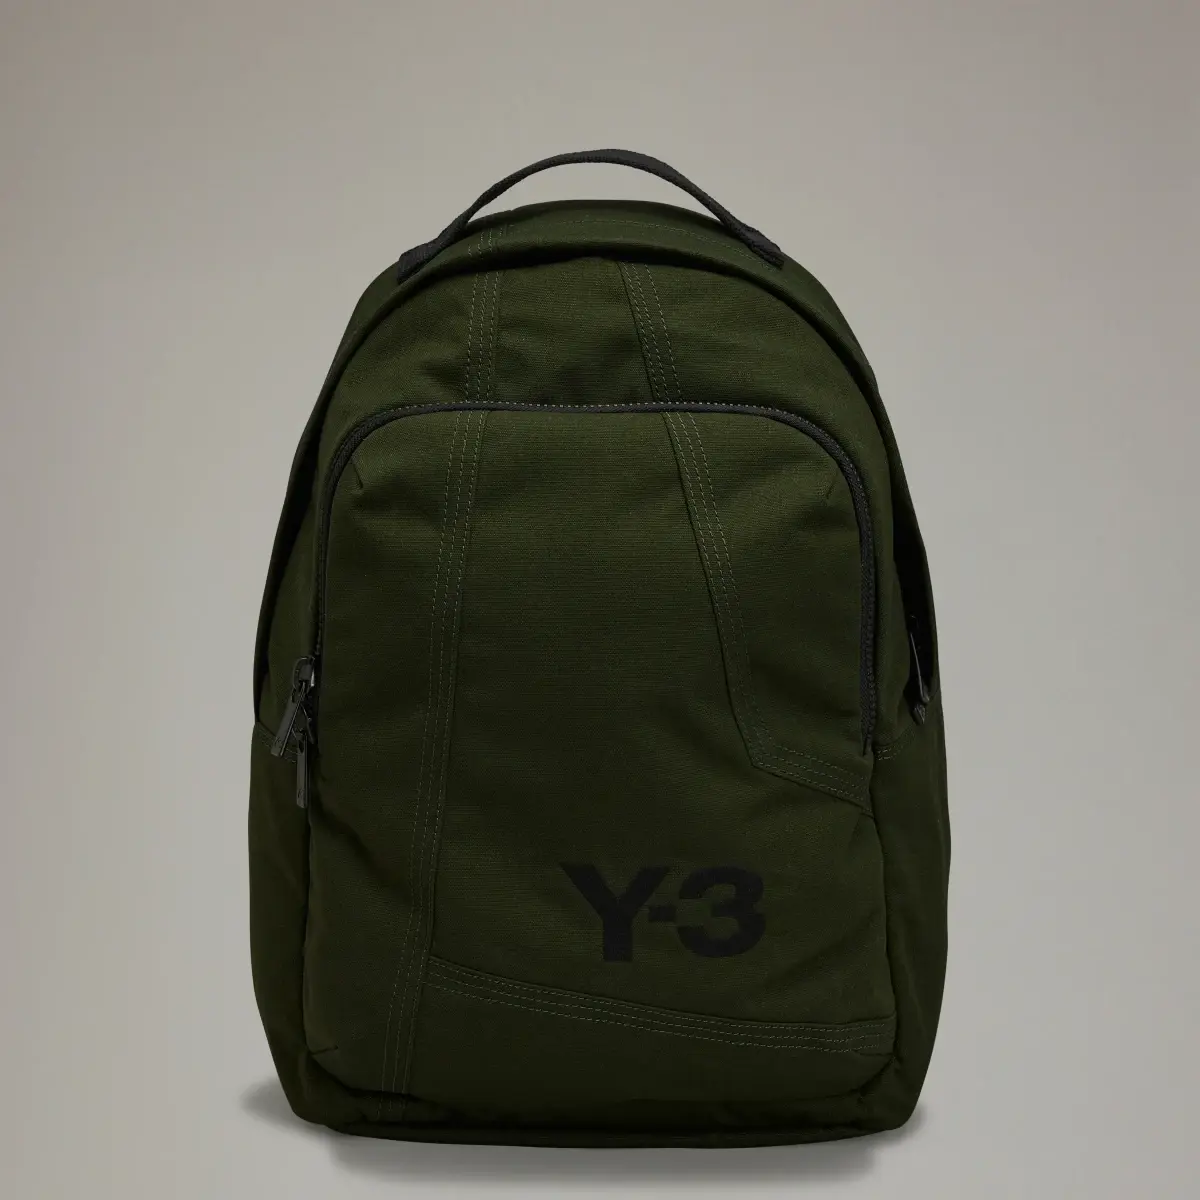 Adidas Y-3 Classic Backpack. 1